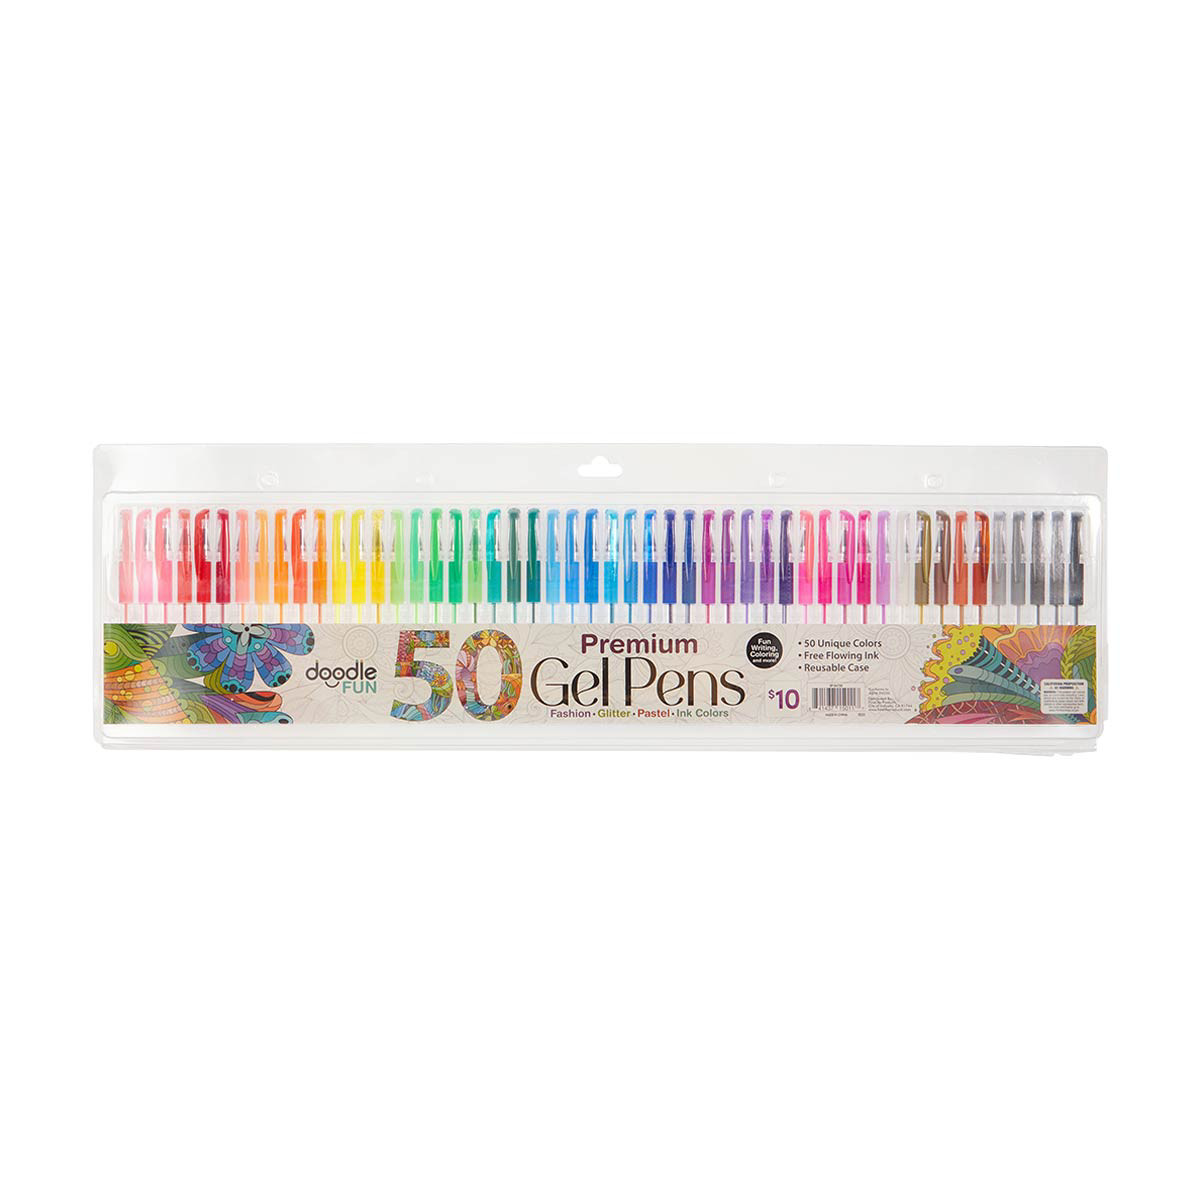 Doodle Fun Premium Gel Pens, 50 Count